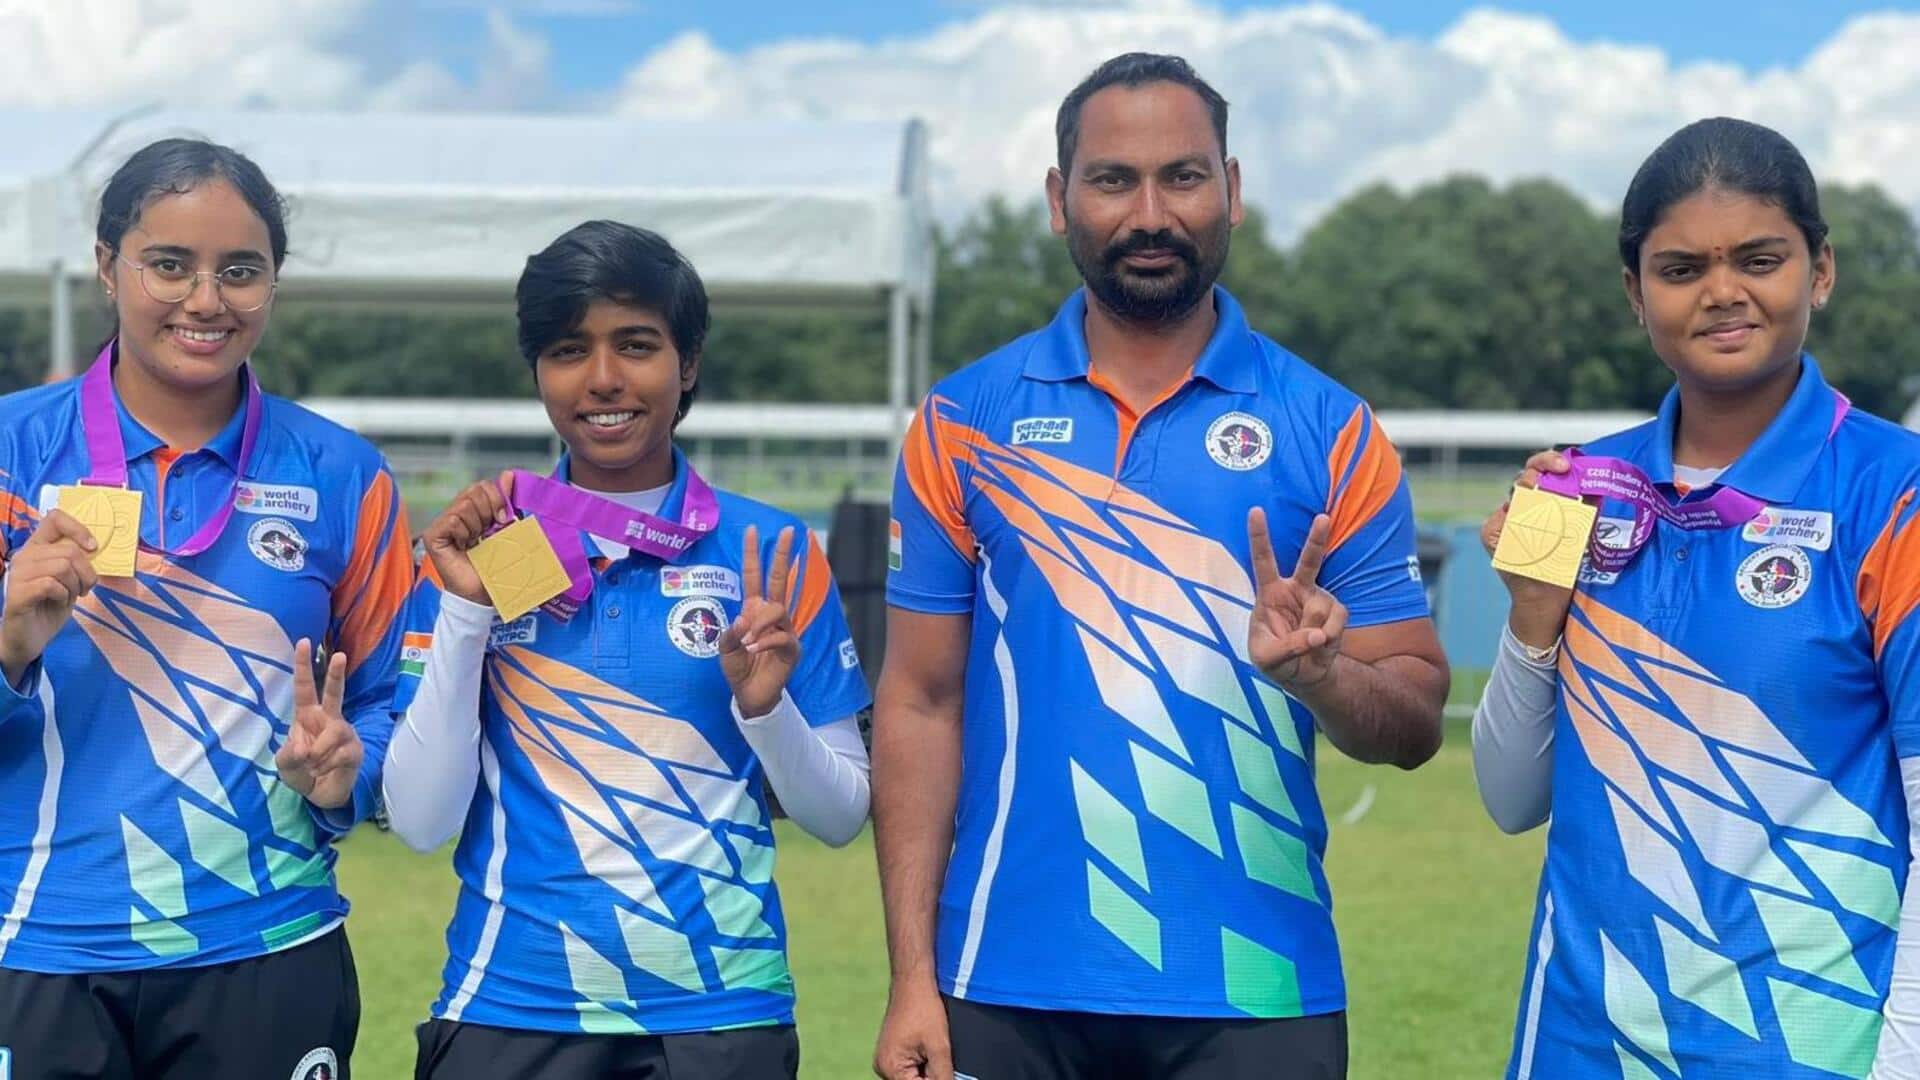 विश्व तीरंदाजी चैंपियनशिप: भारत की महिला कंपाउंड टीम ने जीता गोल्ड, प्रधानमंत्री मोदी ने दी बधाई